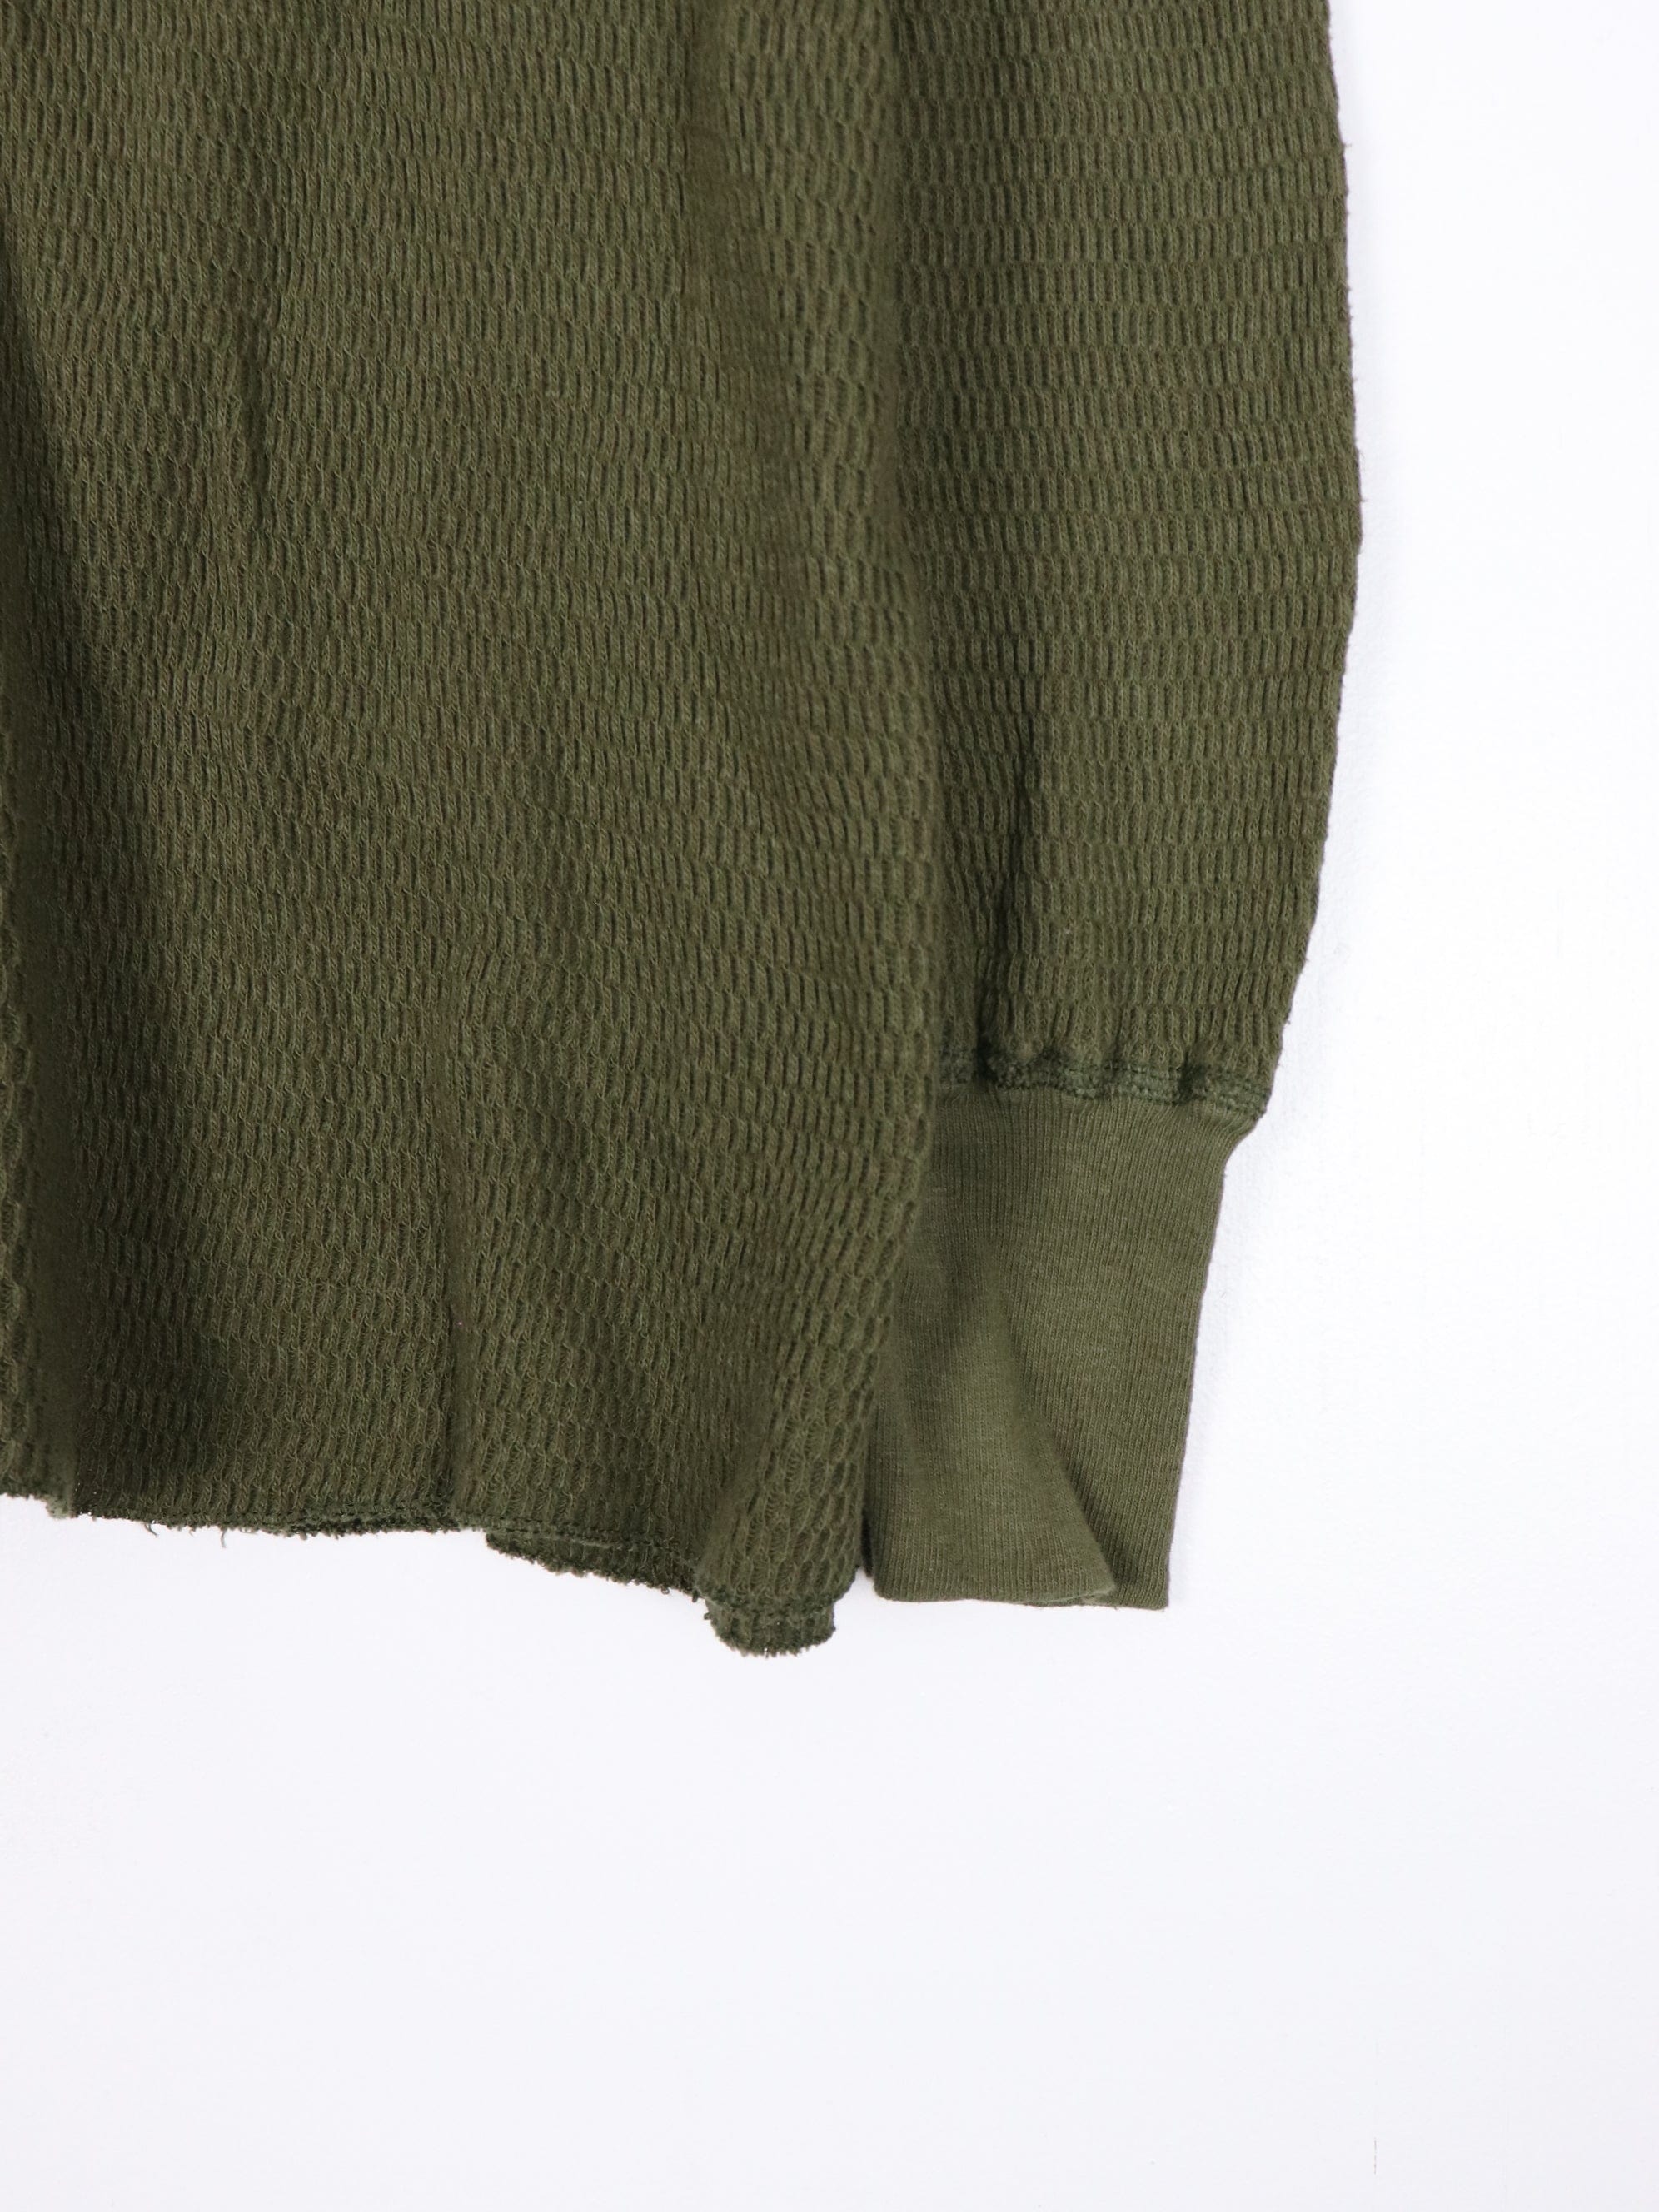 Vintage Penmens Shirt Womens Small Green Thermal Army Undershirt – Proper  Vintage